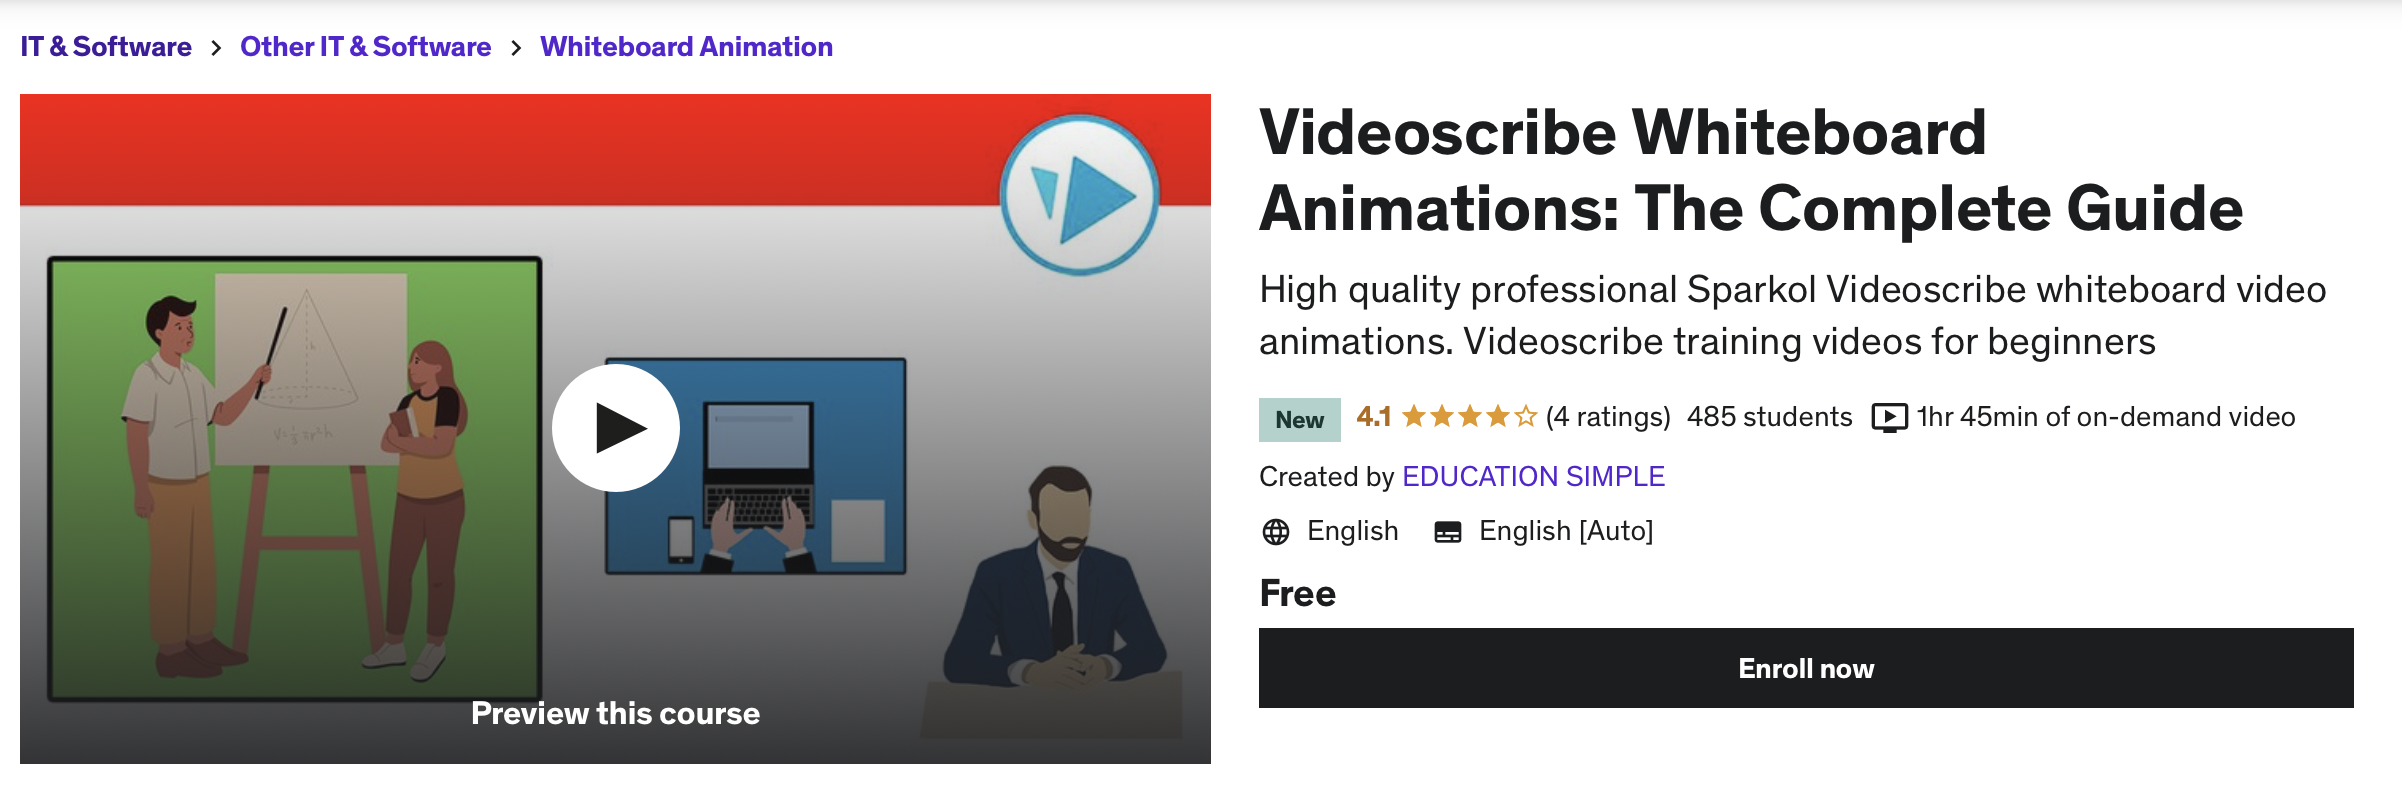 Videoscribe Whiteboard Animations